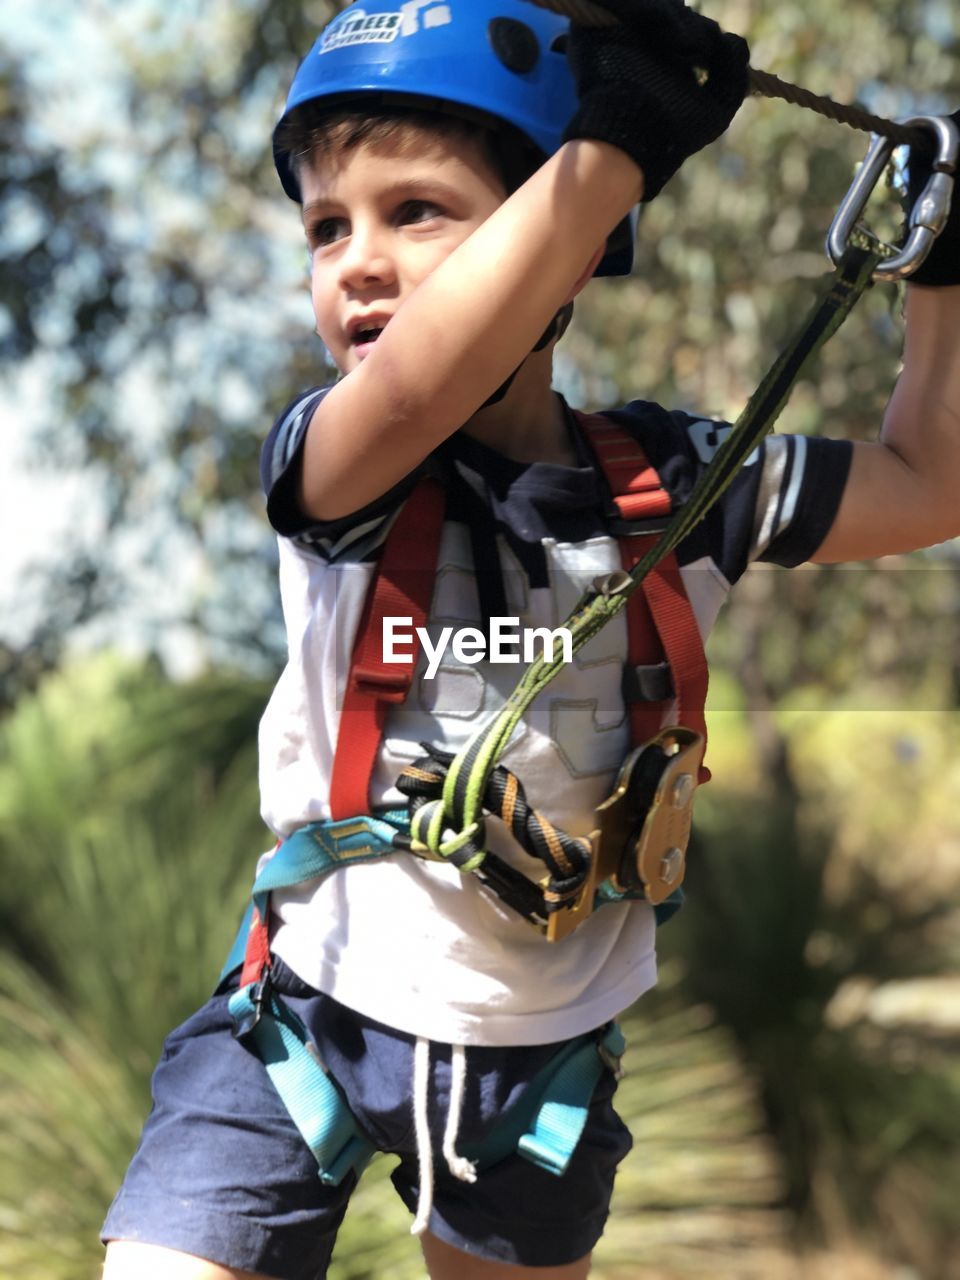 Boy climbing in harness